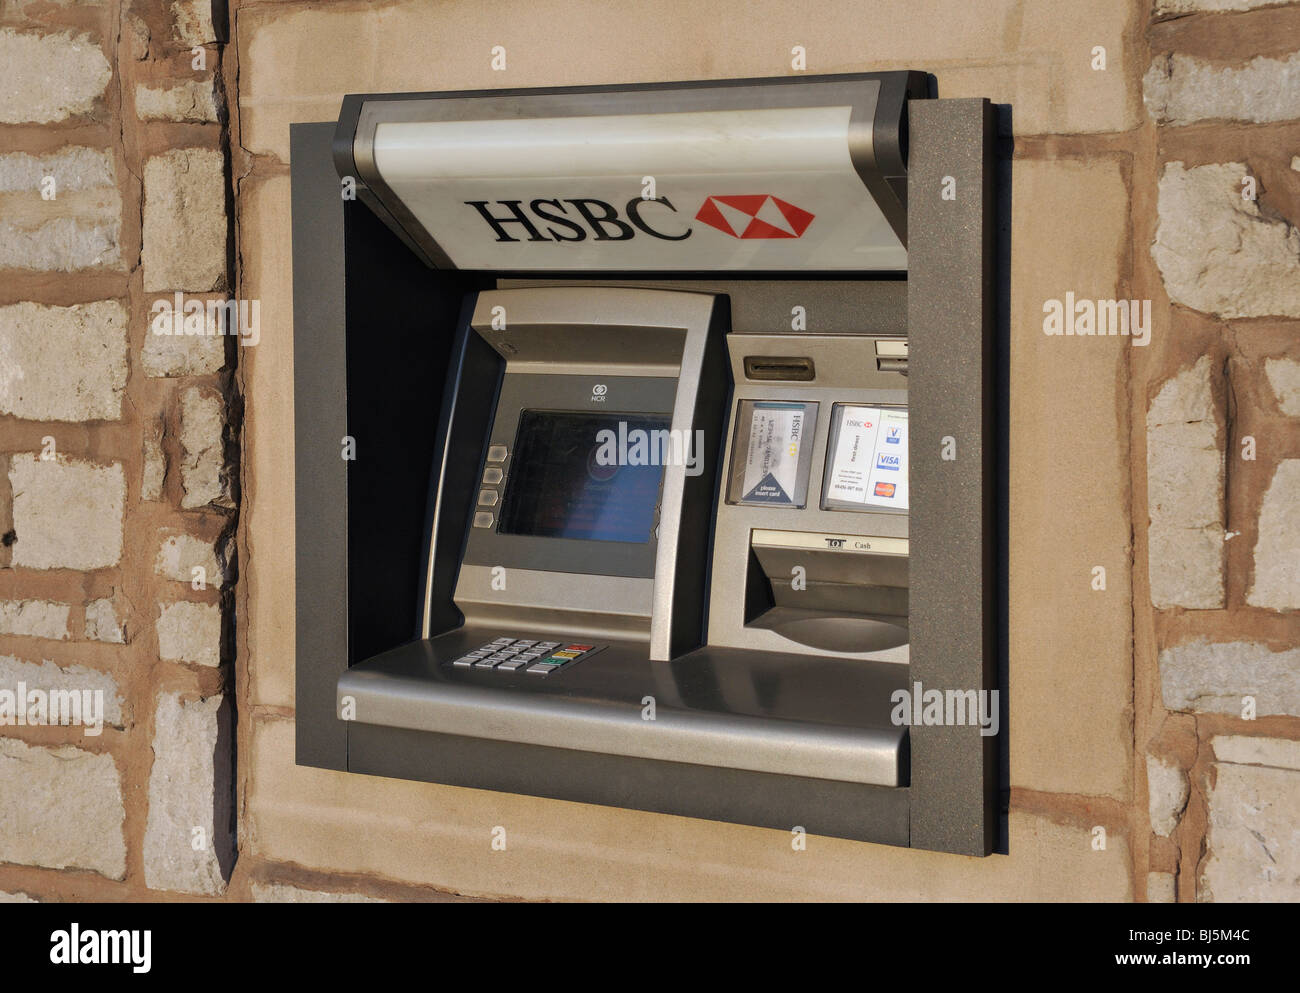 HSBC cash dispenser. Stock Photo